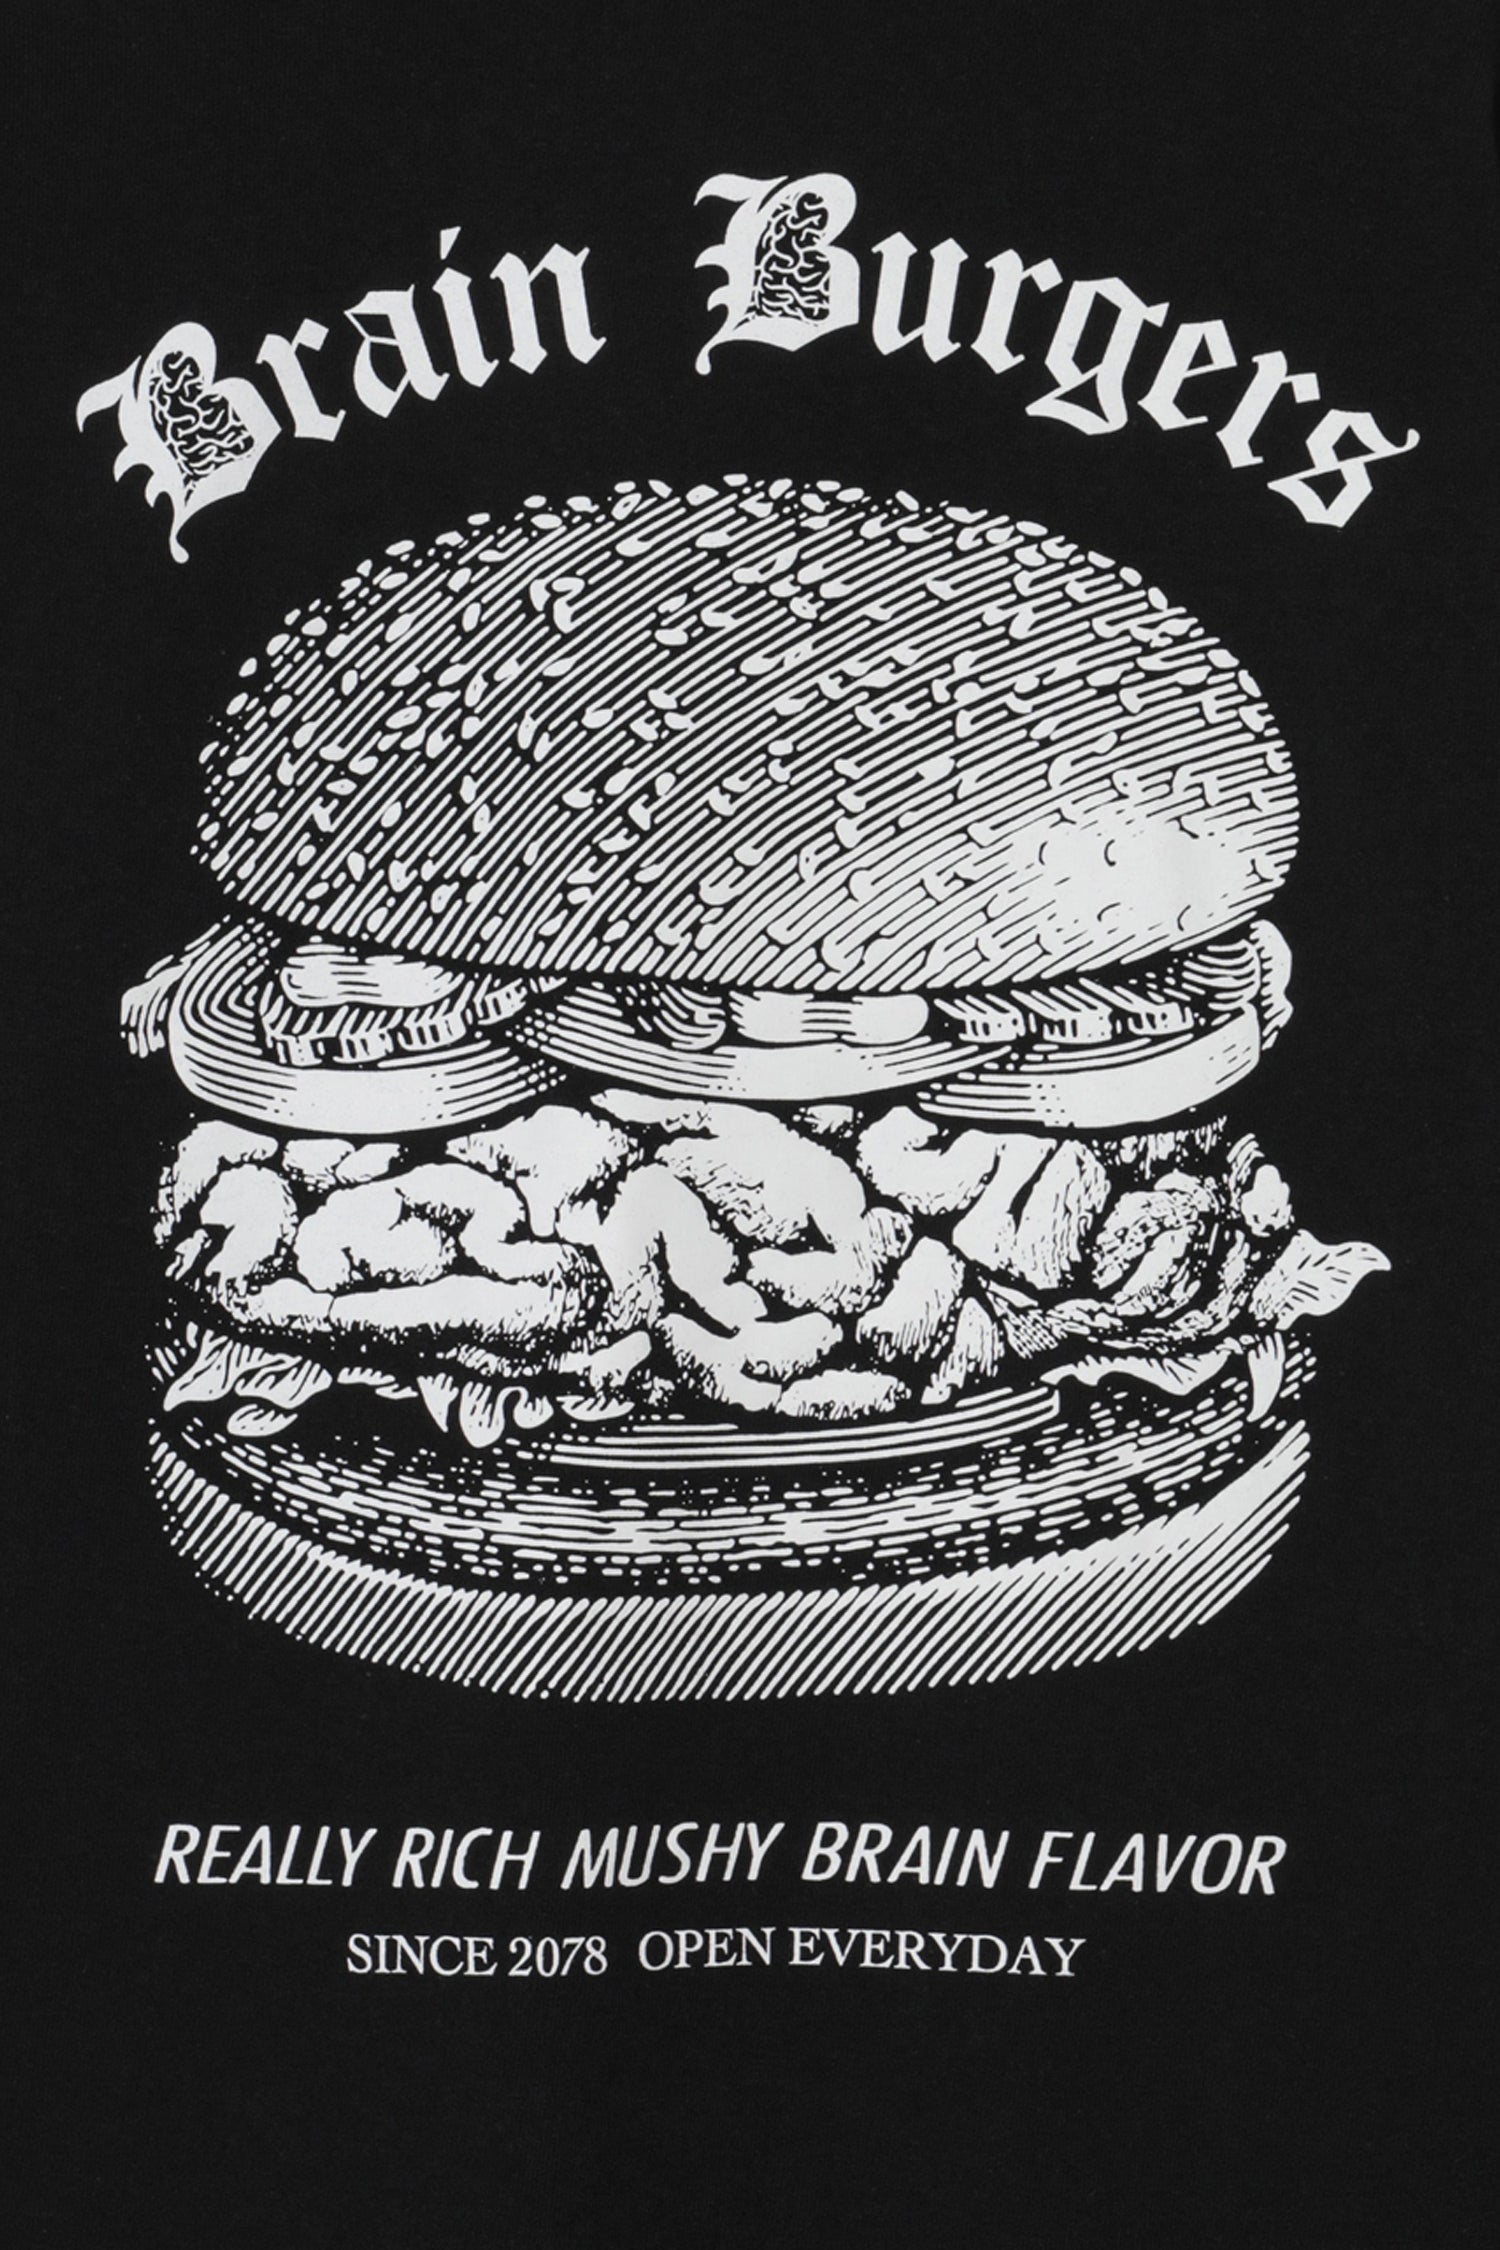 Selectshop FRAME - UNDERCOVER Brain Burgers T-Shirt T-Shirt Dubai